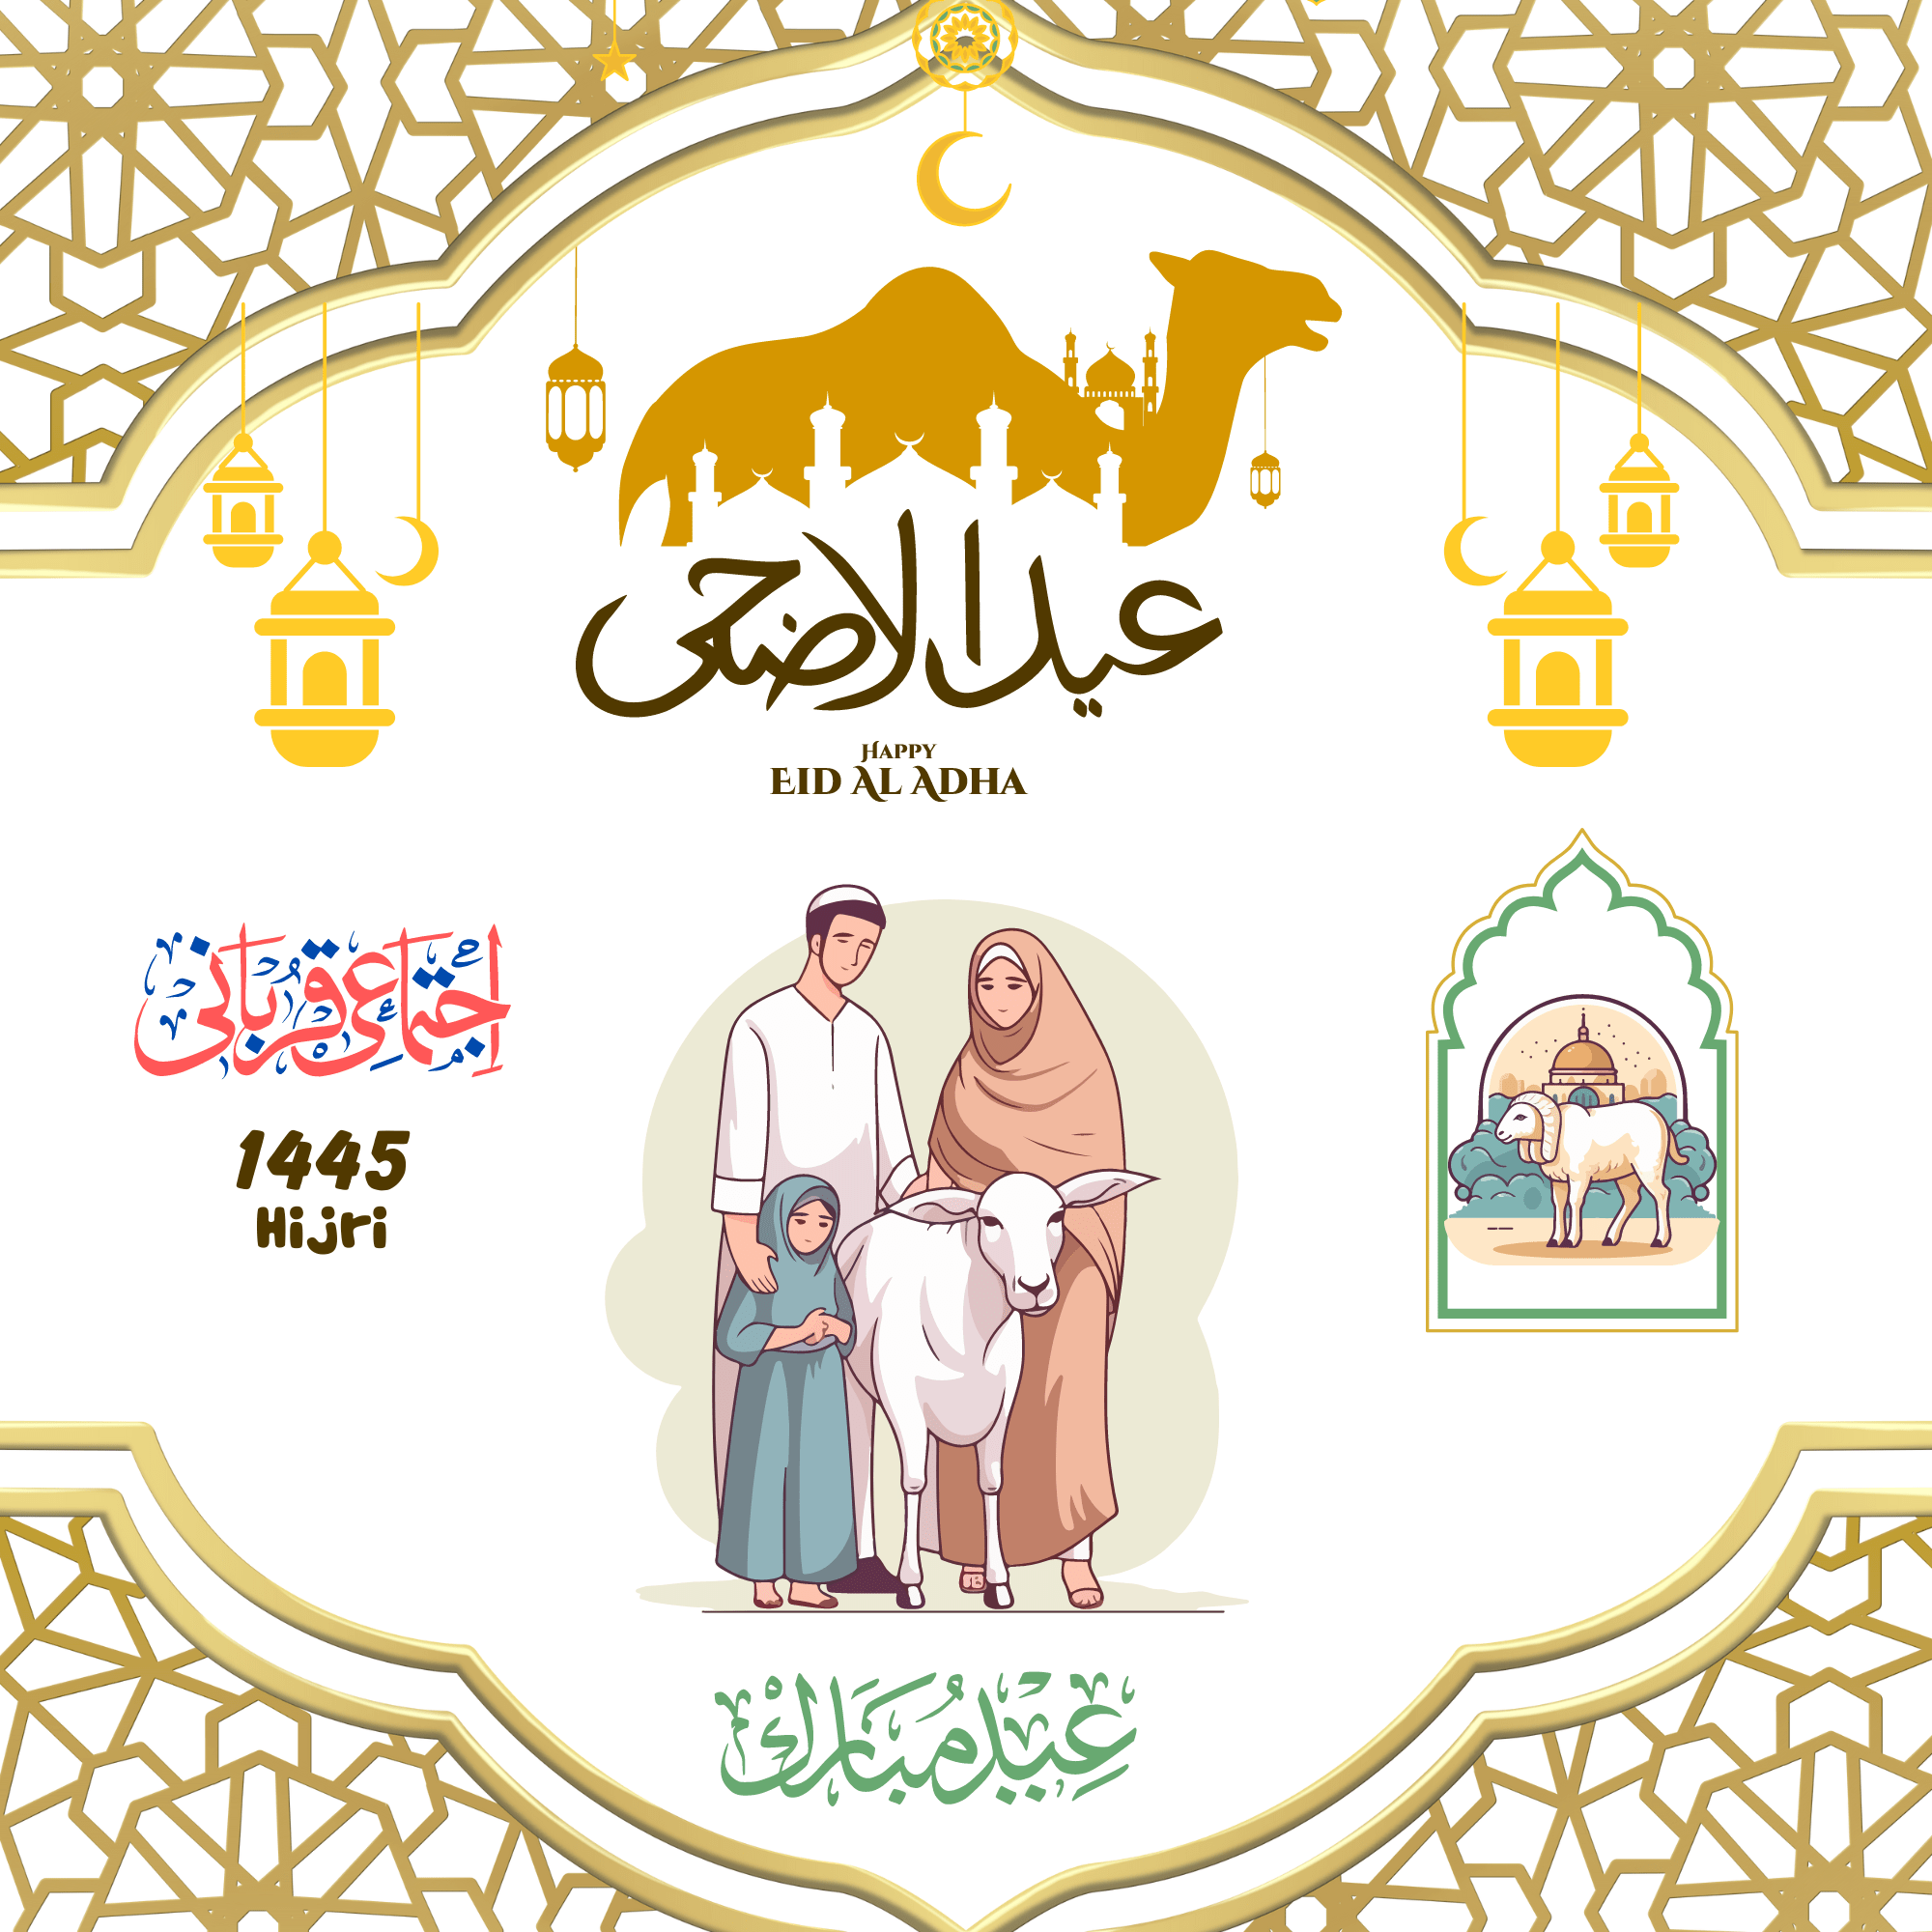 Printable Eid-al- adha Mubarak Design for Sale cover image.